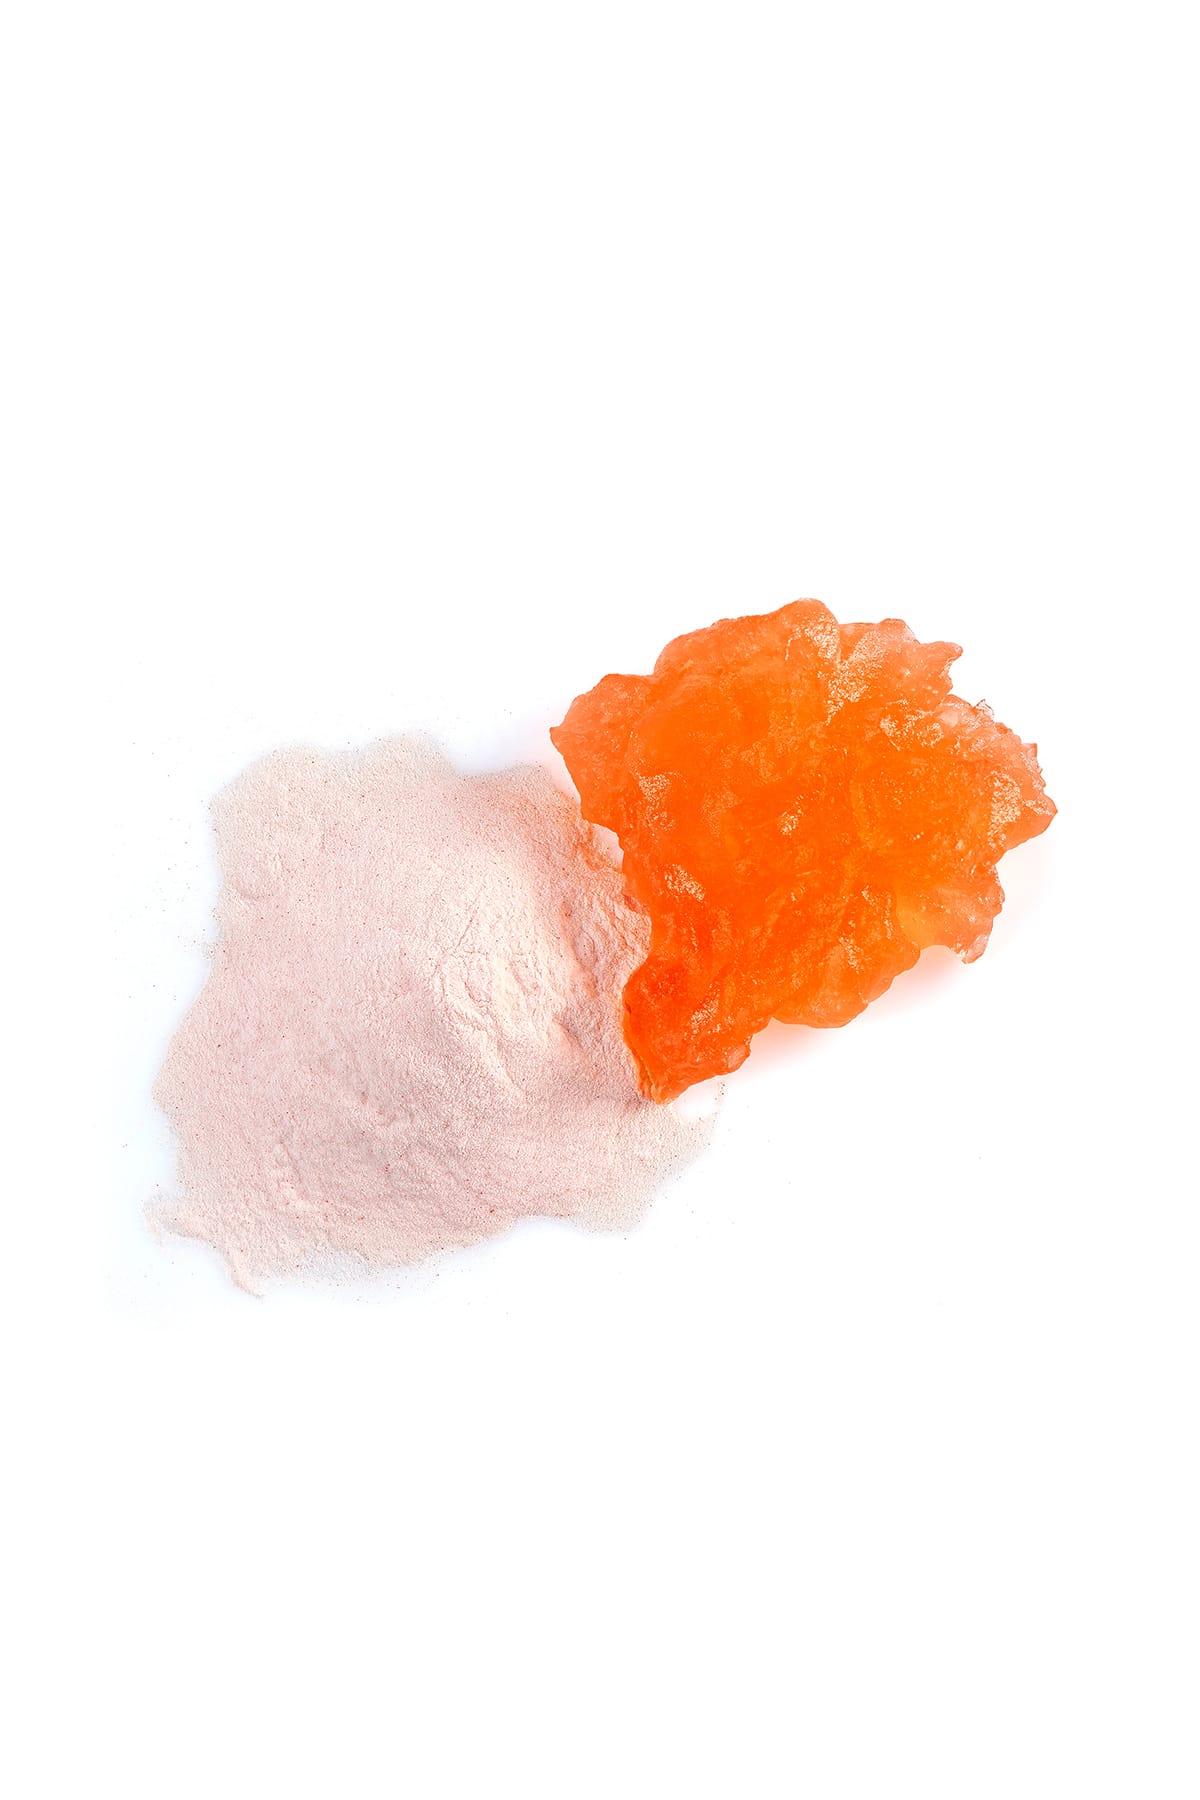 Vitamin C Glow Mask Orange Snow Cone visage / face Vitamin C Glow Mask High on Fun 